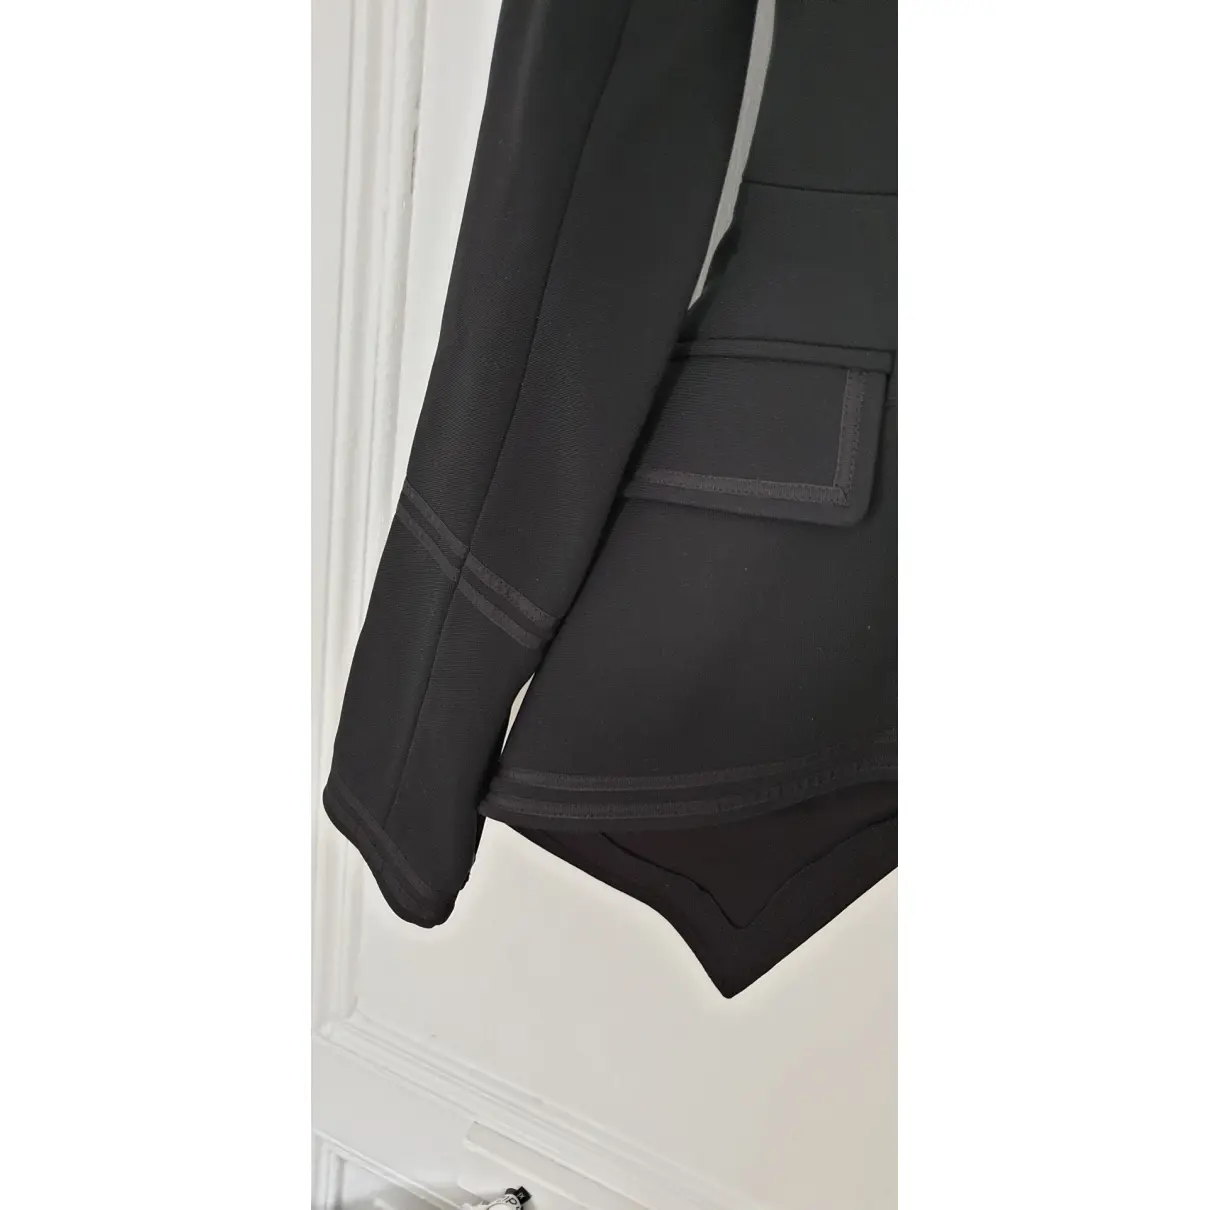 Black Synthetic Jacket Givenchy